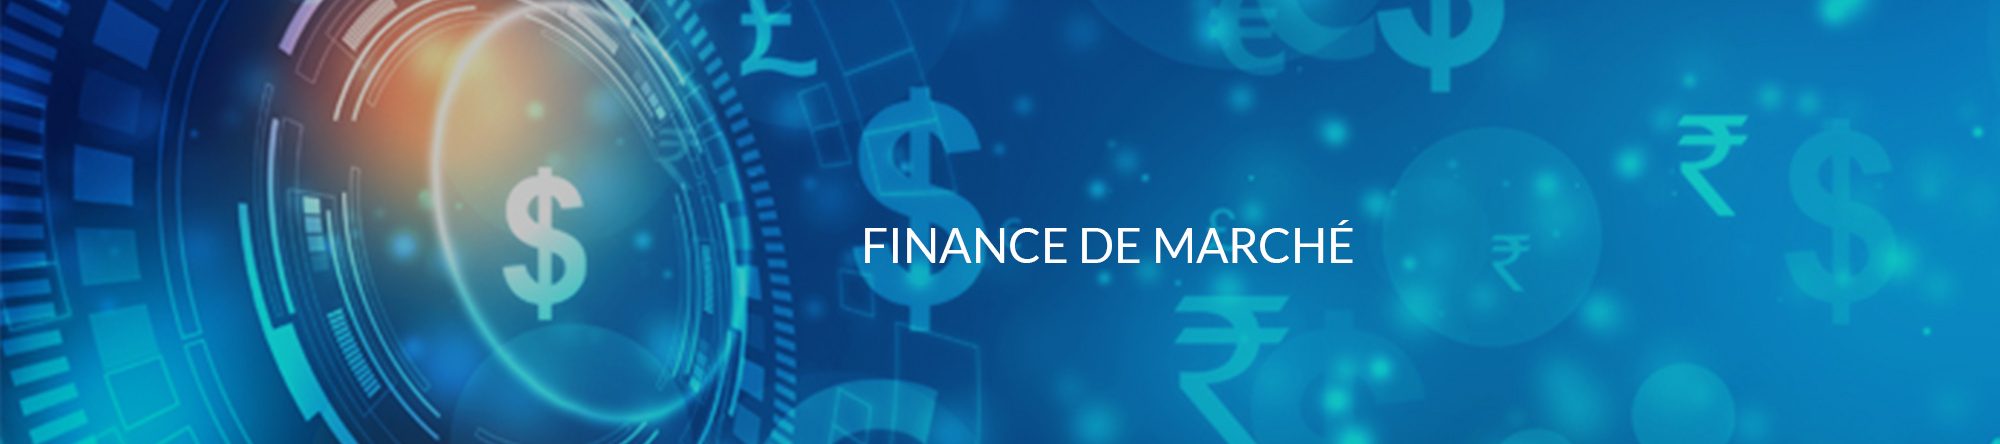 Header-MOA-Finance-de-marché